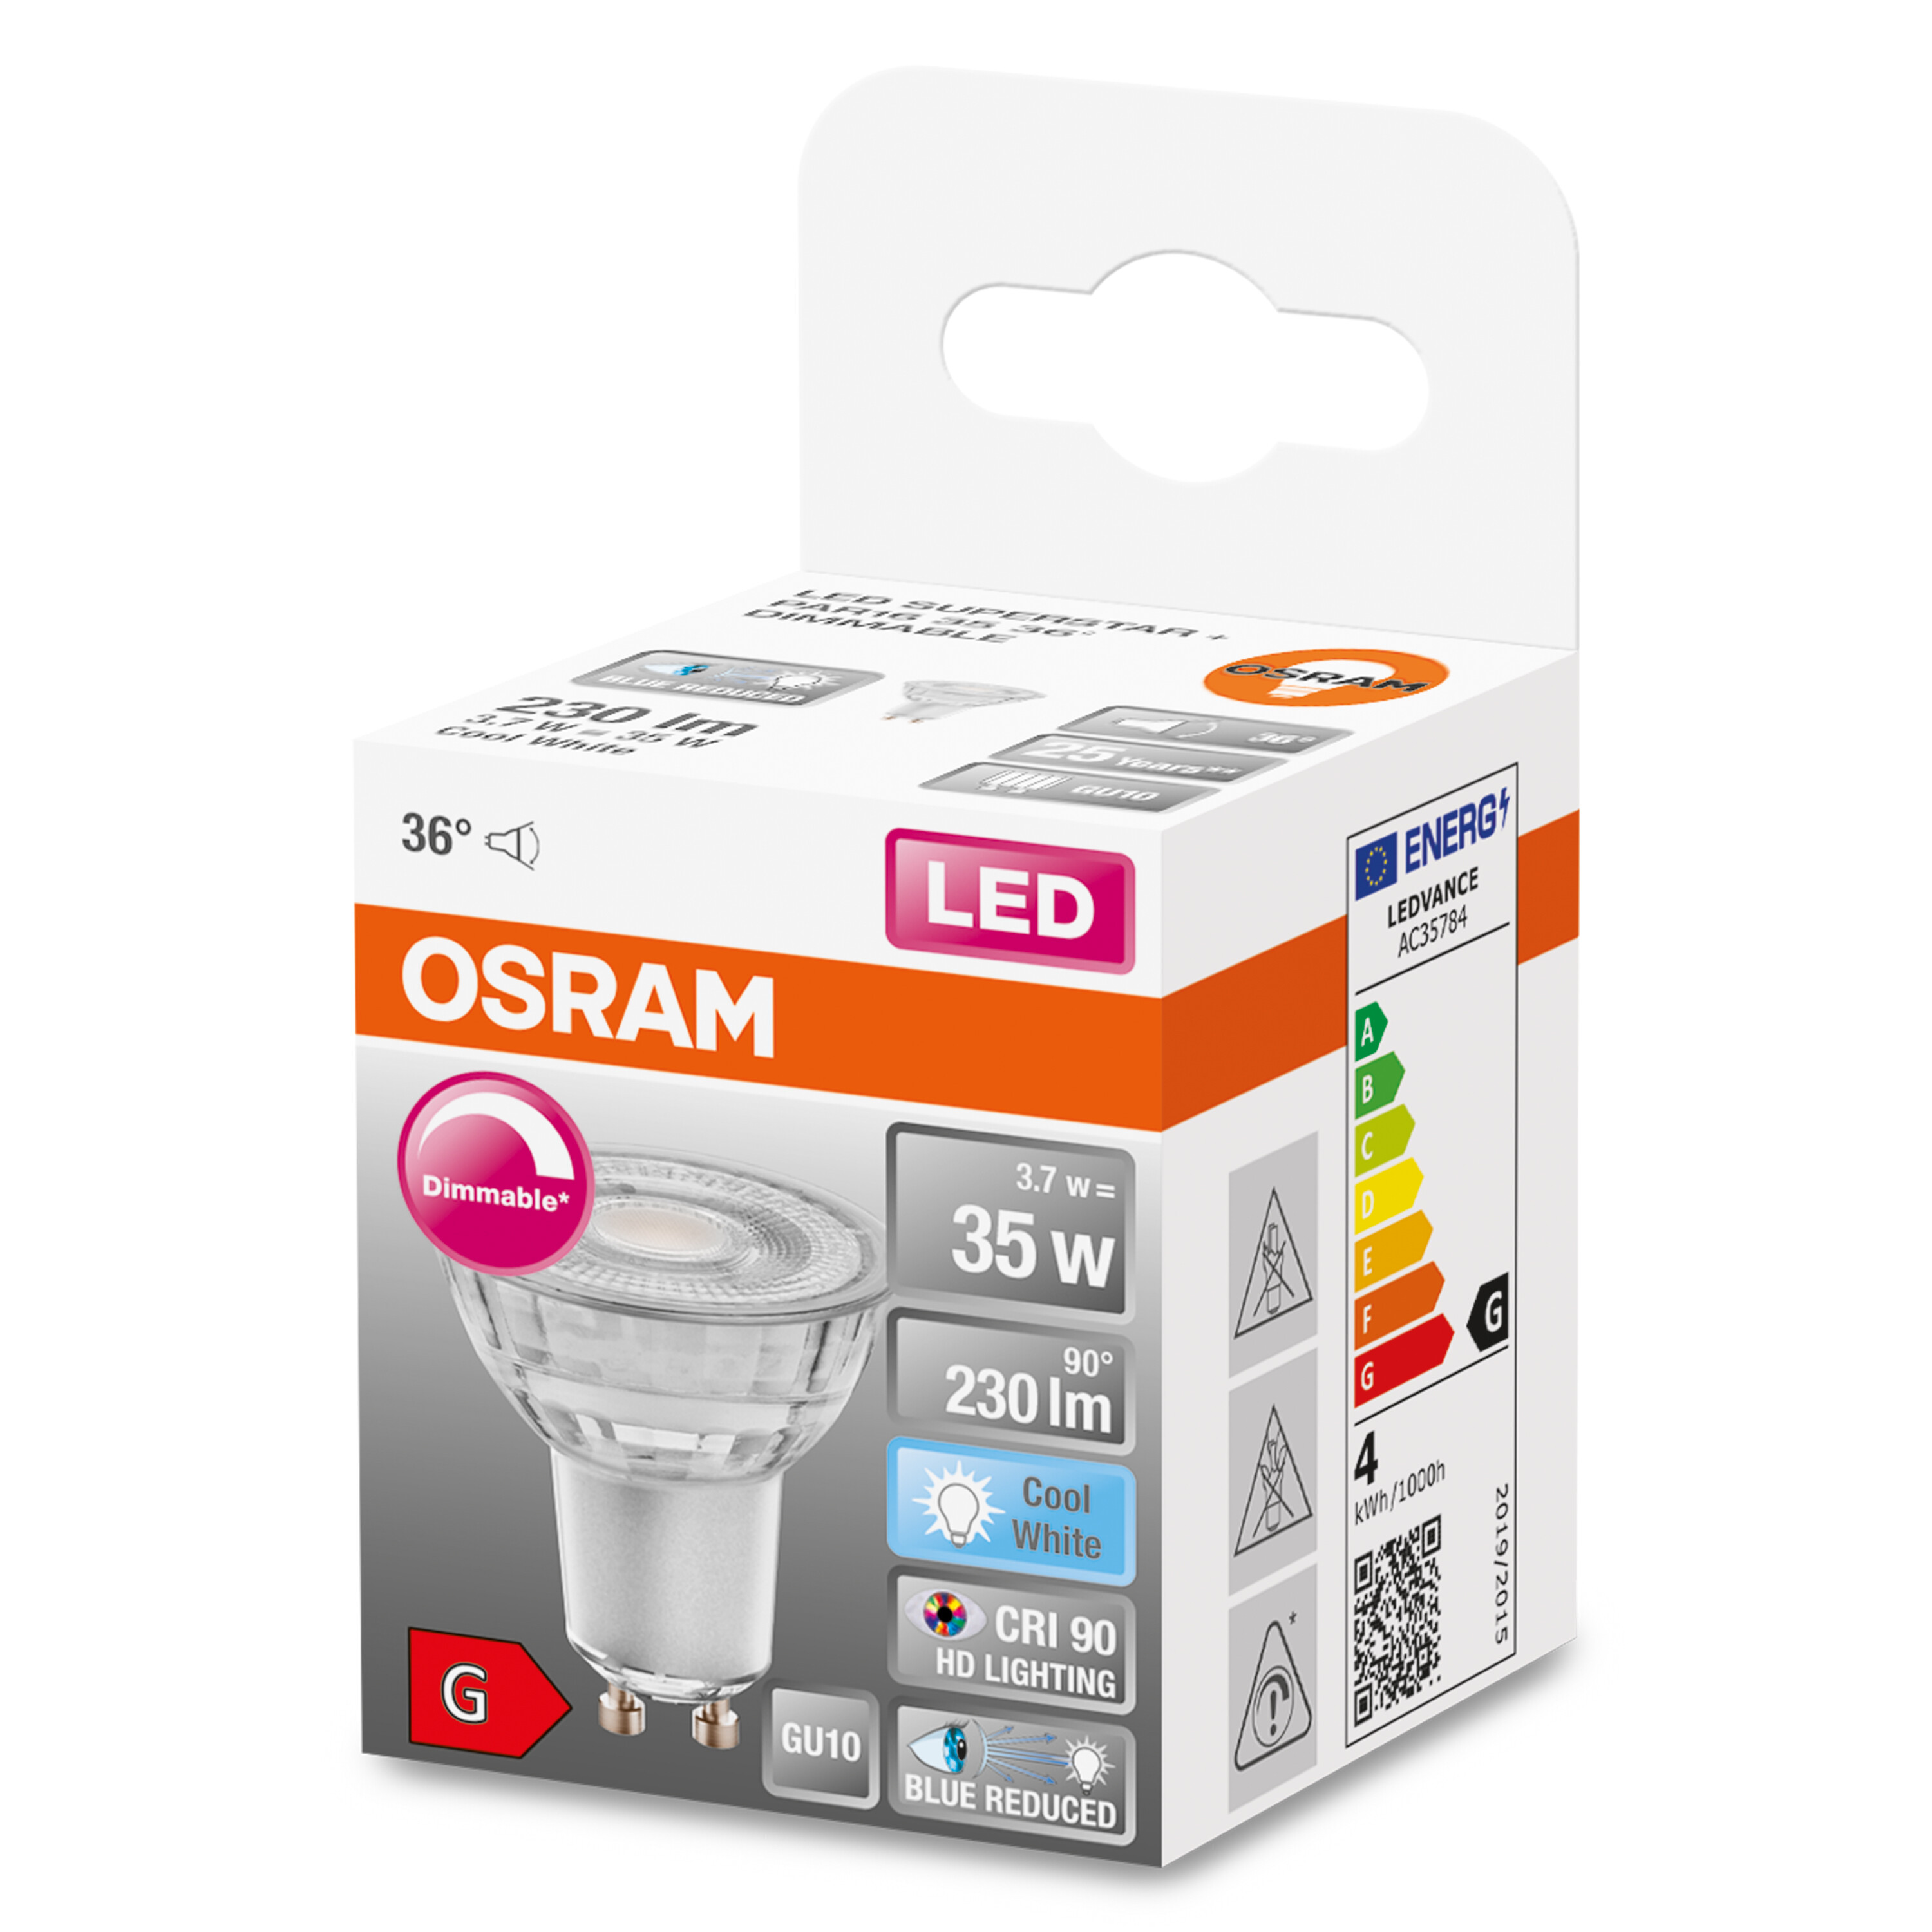 OSRAM  LED SUPERSTAR PLUS REFLECTOR Reflektor-Lampe Lumen PAR16 Kaltweiß 230 LED